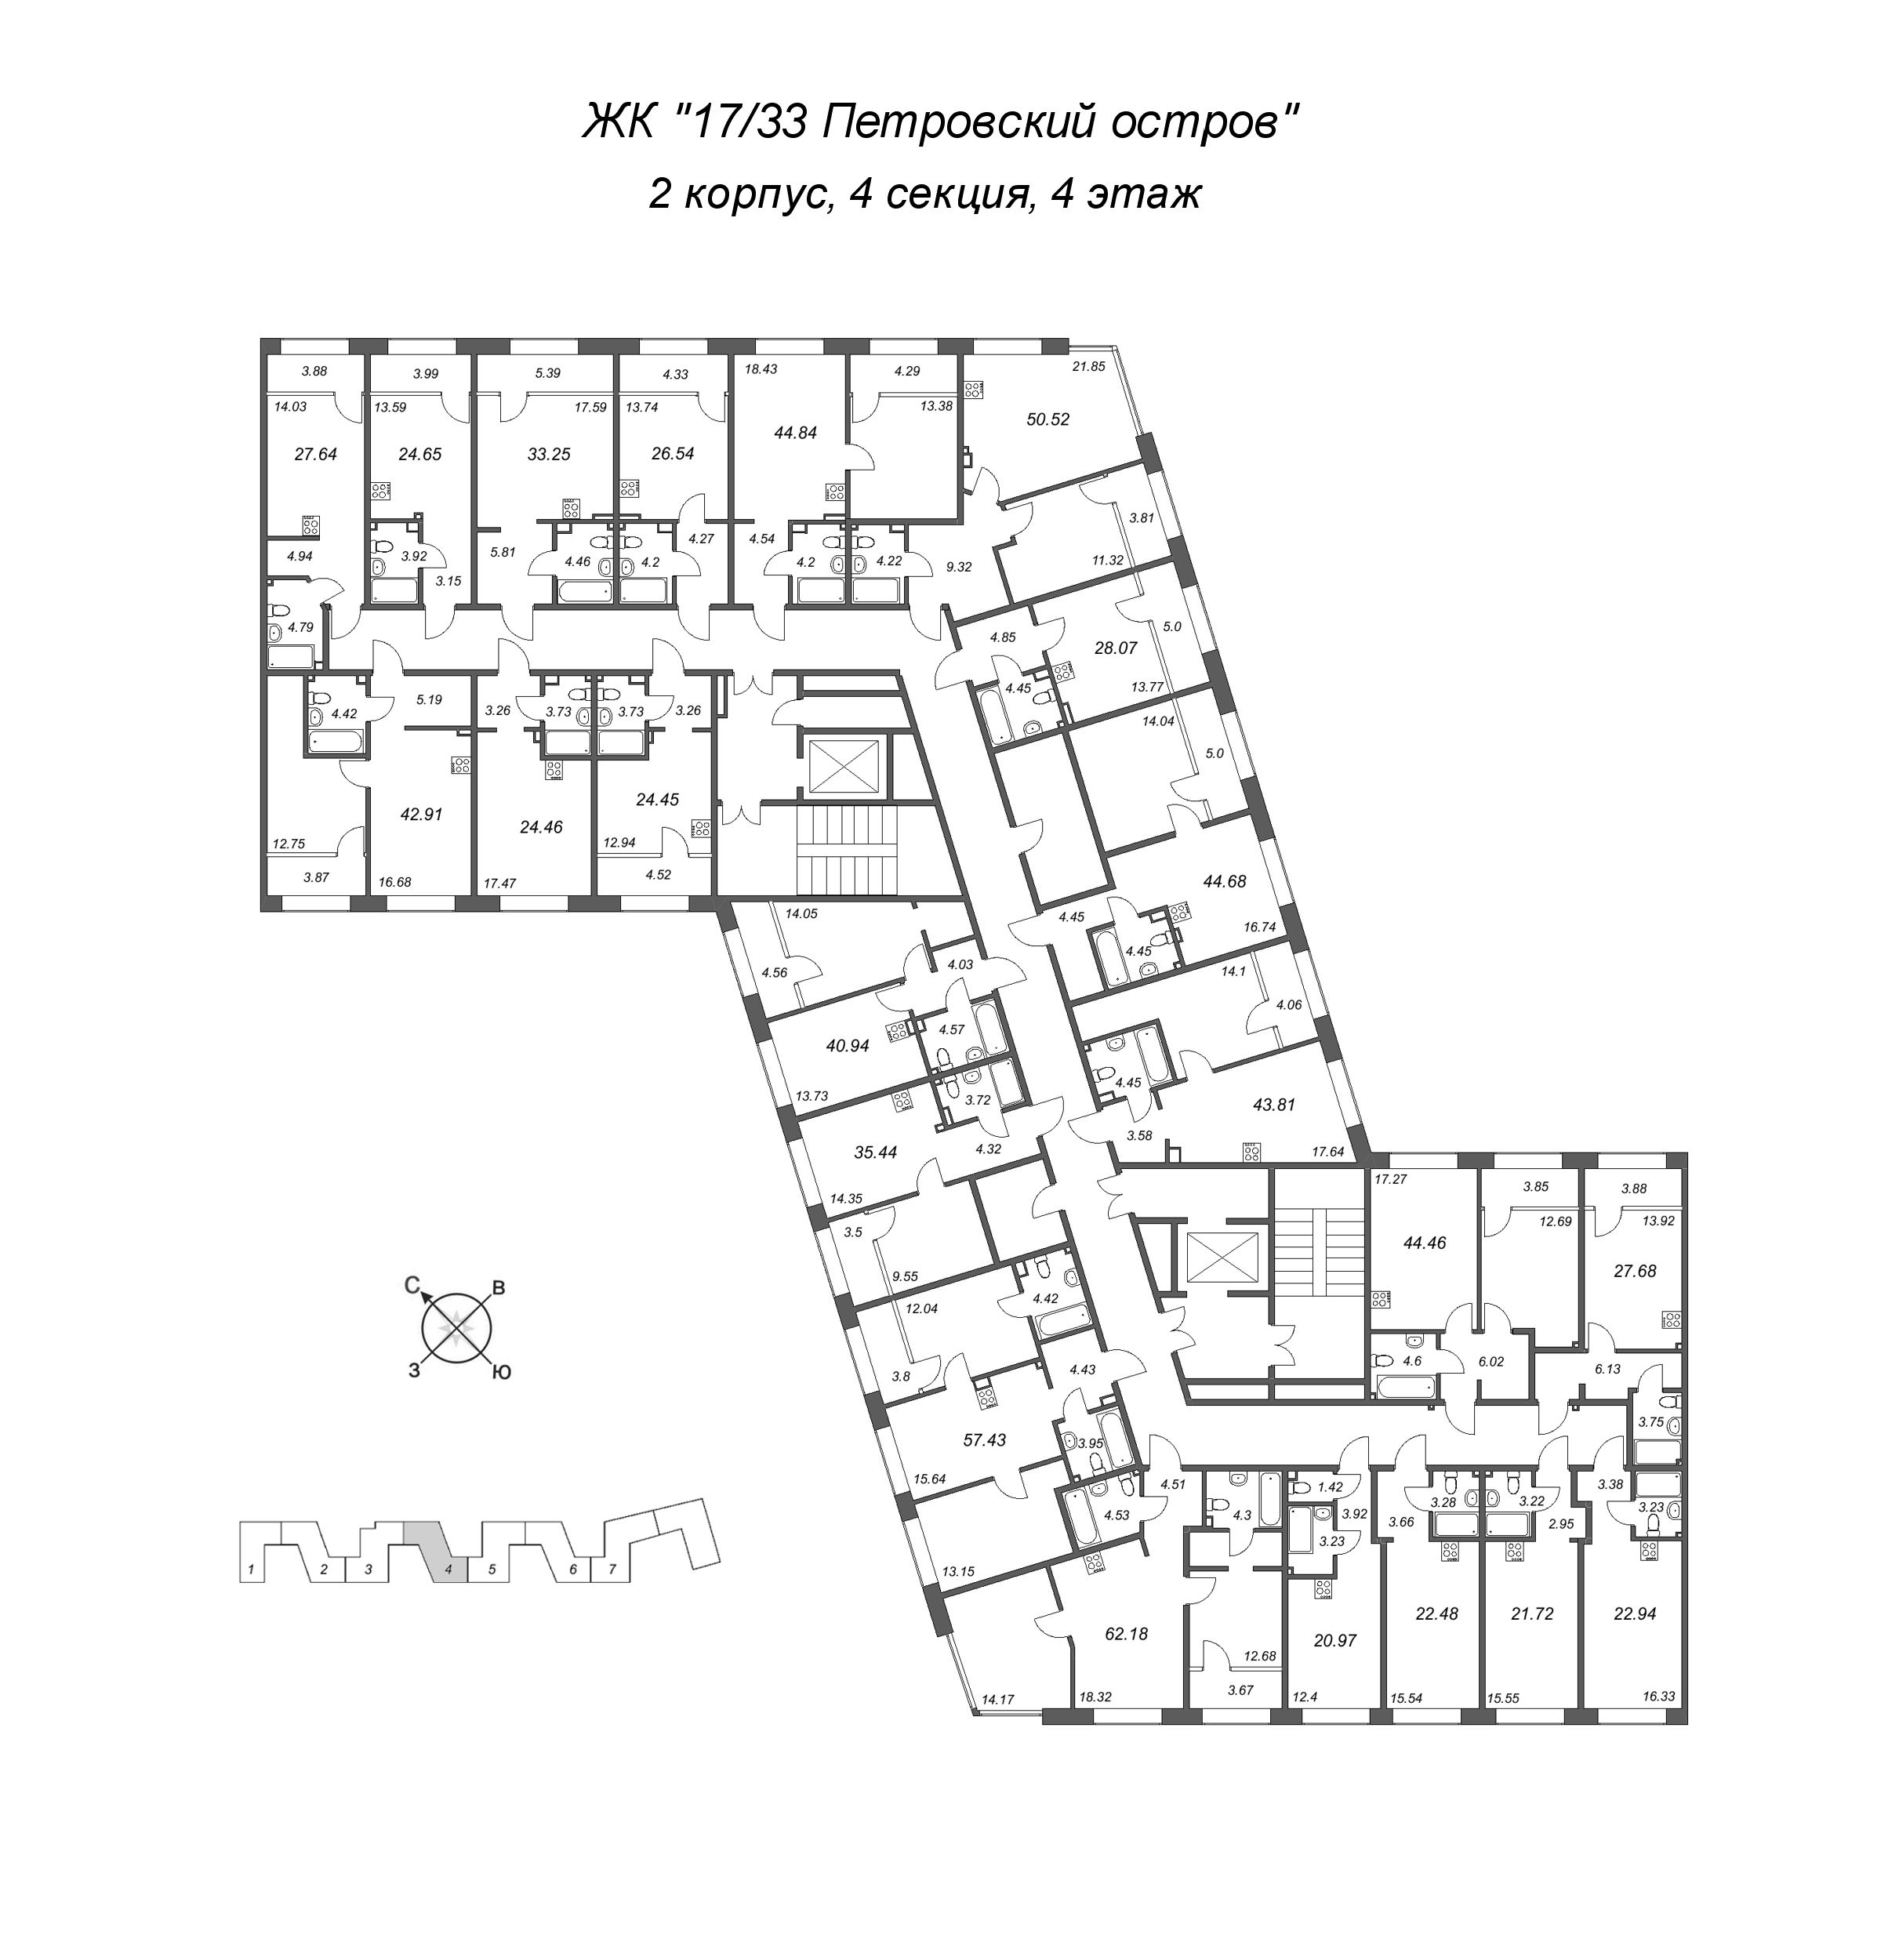 3-комнатная (Евро) квартира, 57.43 м² - планировка этажа